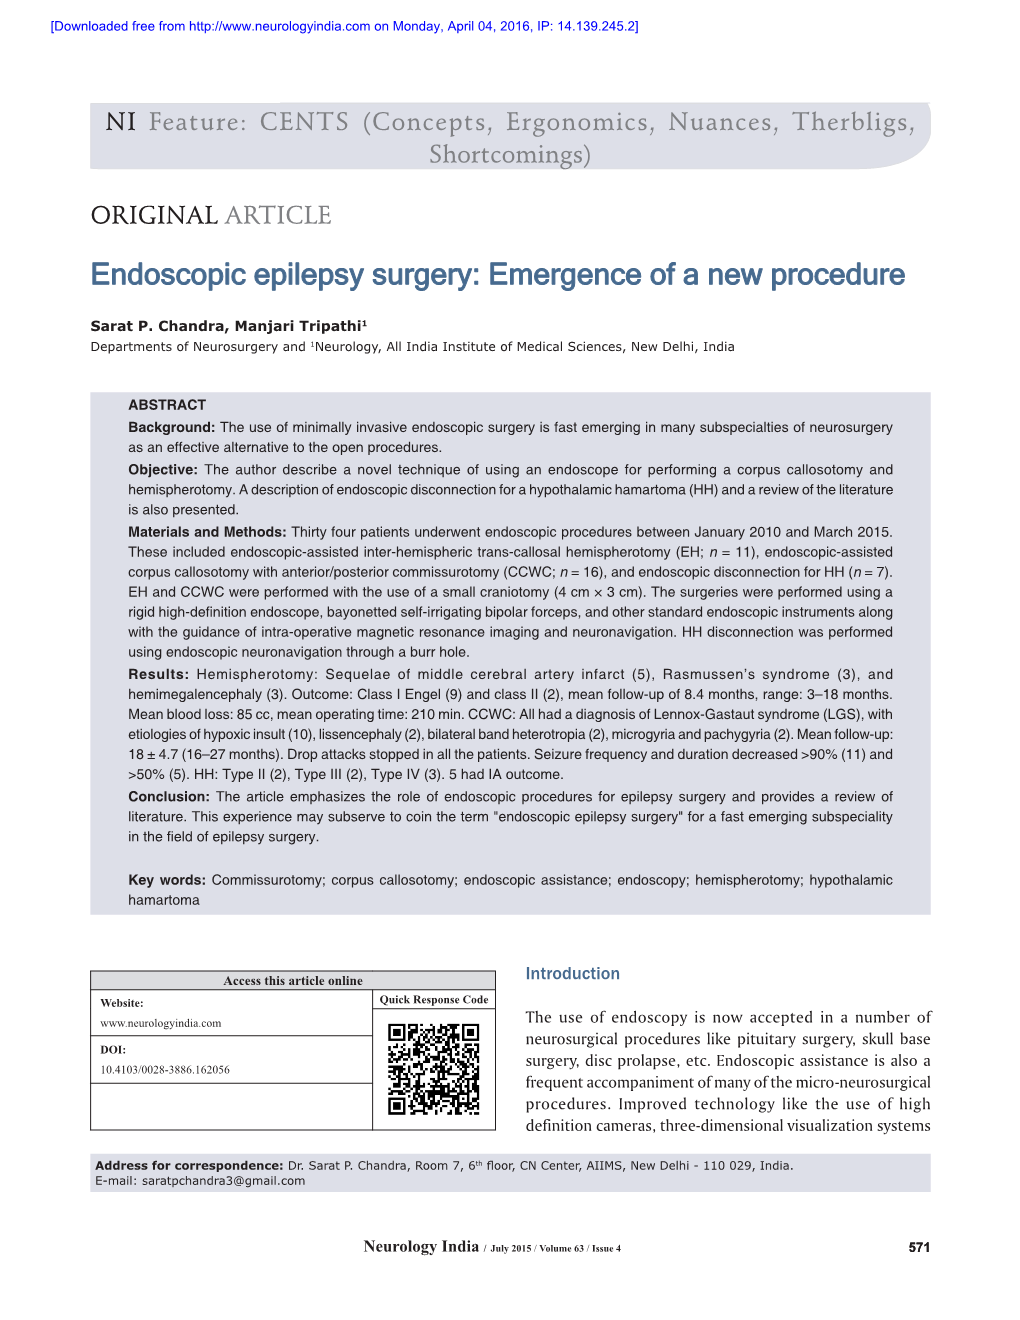 Endoscopic Epilepsy Surgery: Emergence of a New Procedure